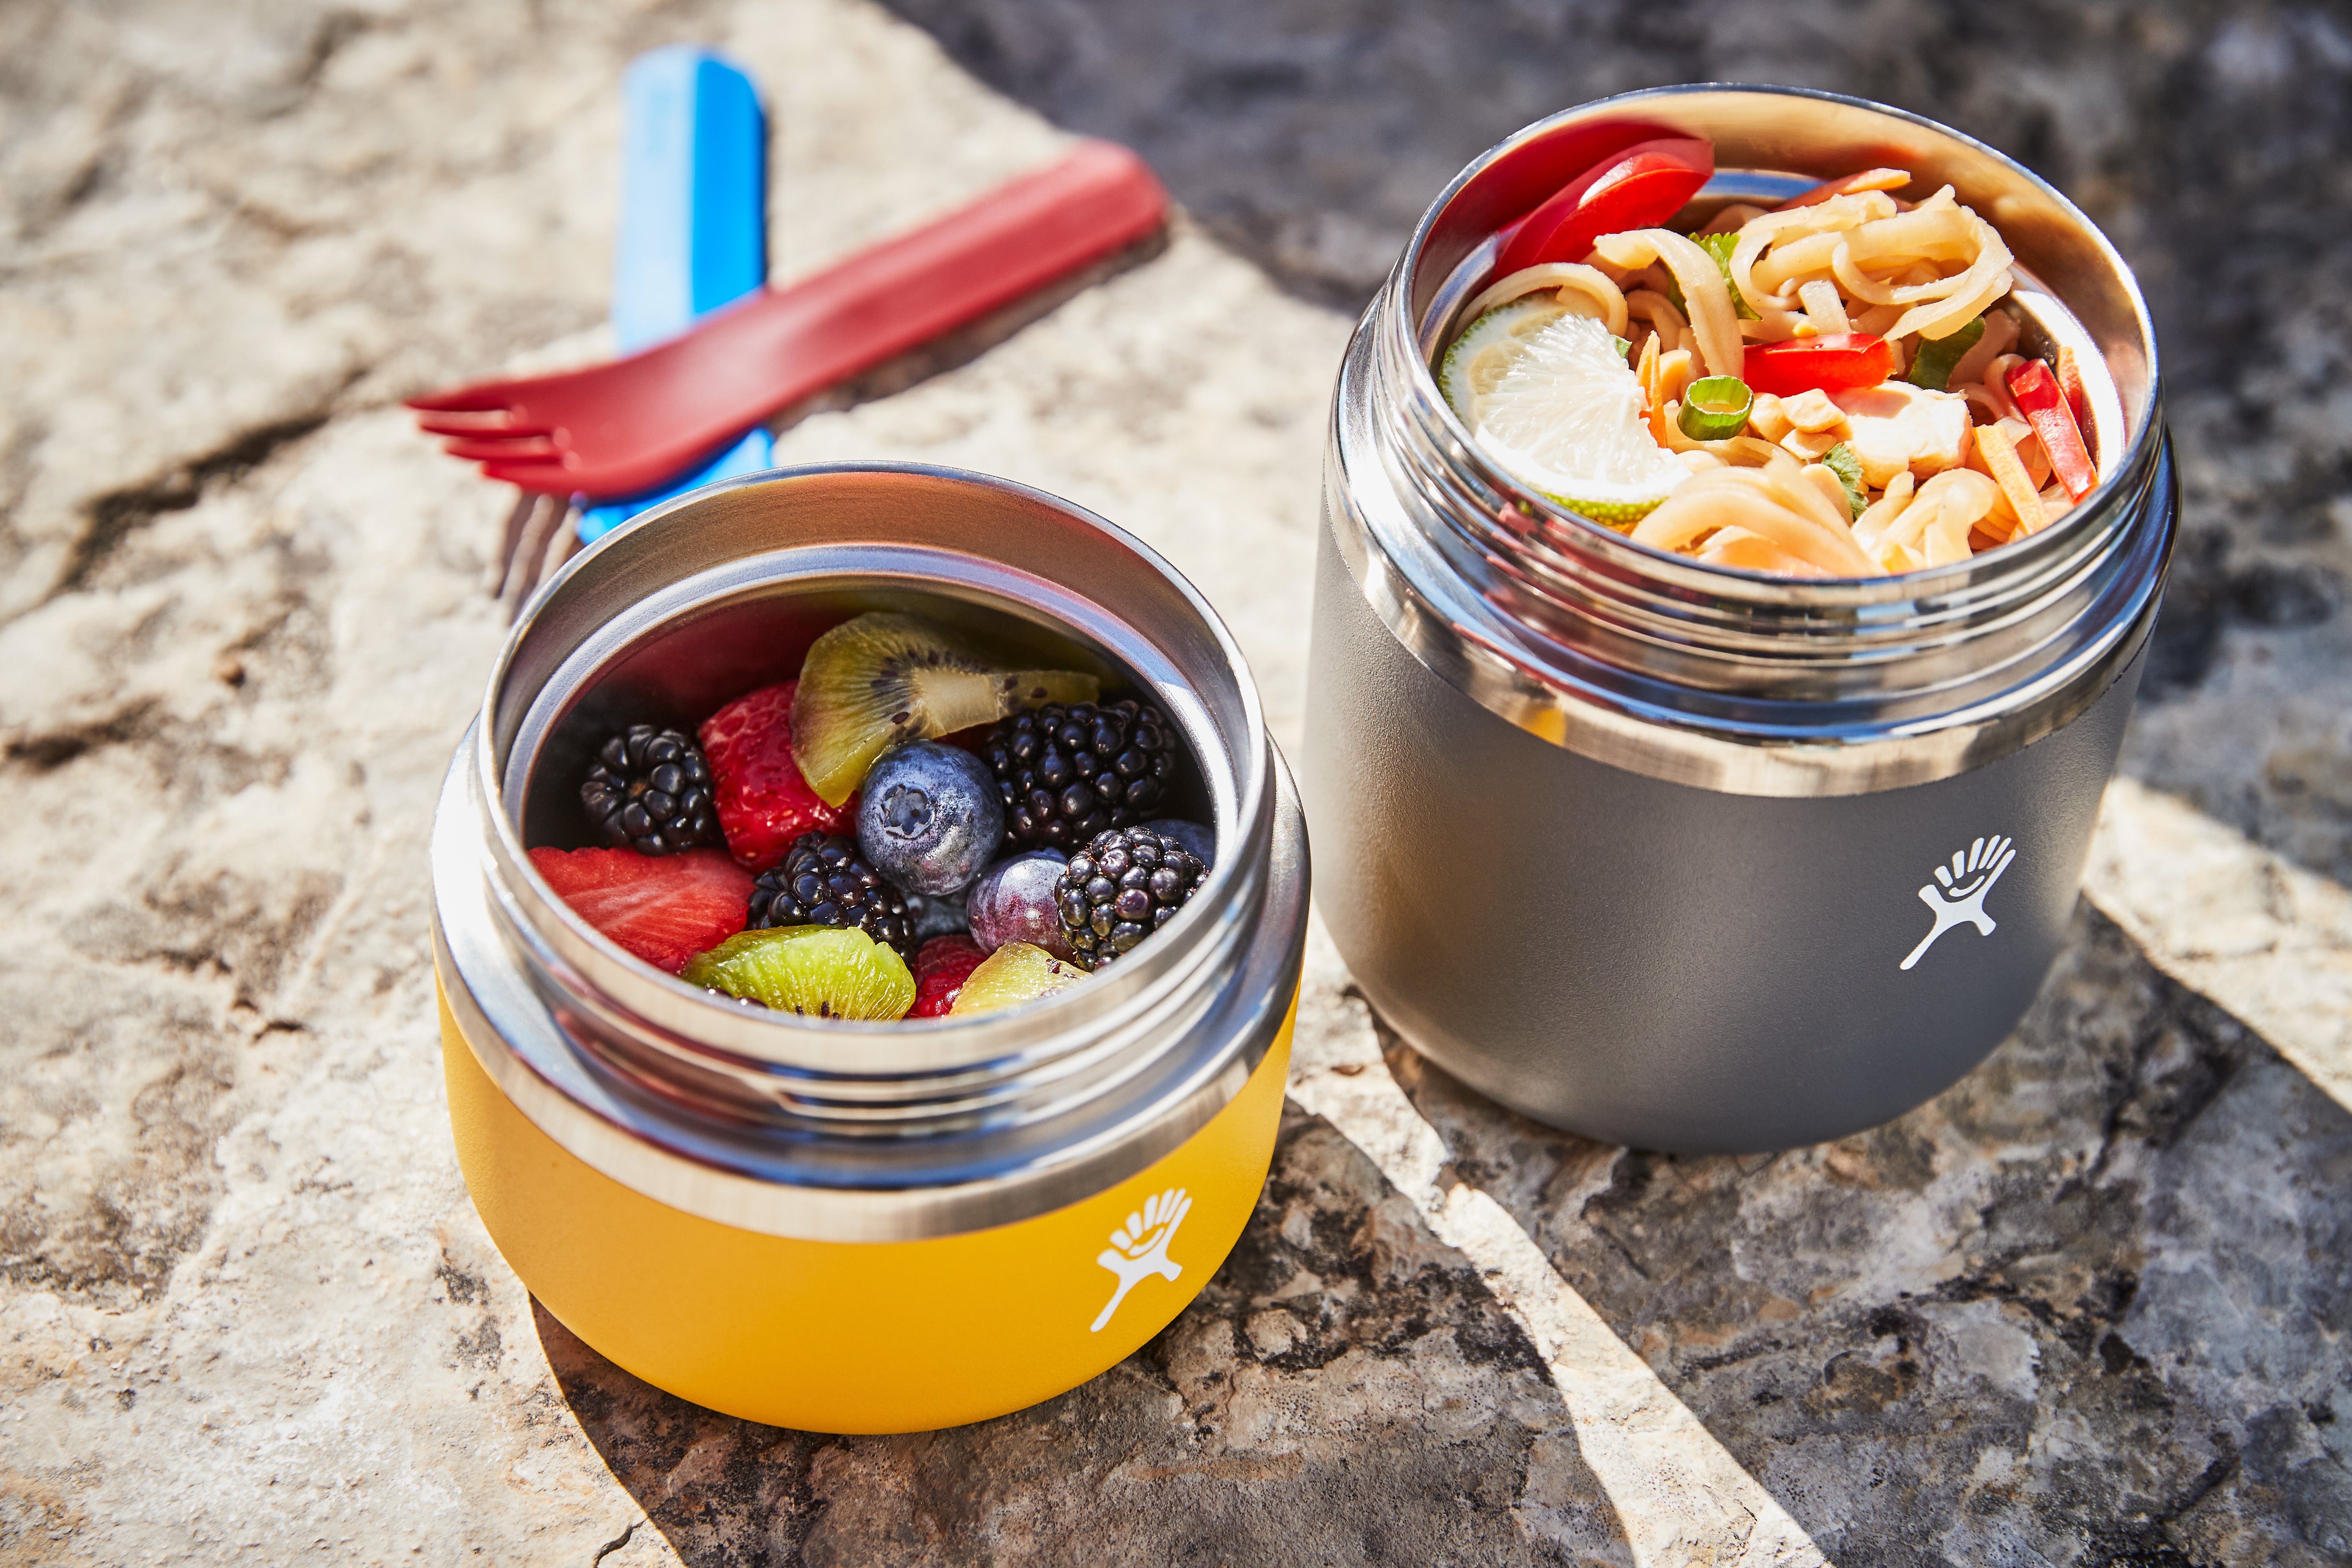 Hydro Flask 12 oz. Kids' Insulated Food Jar